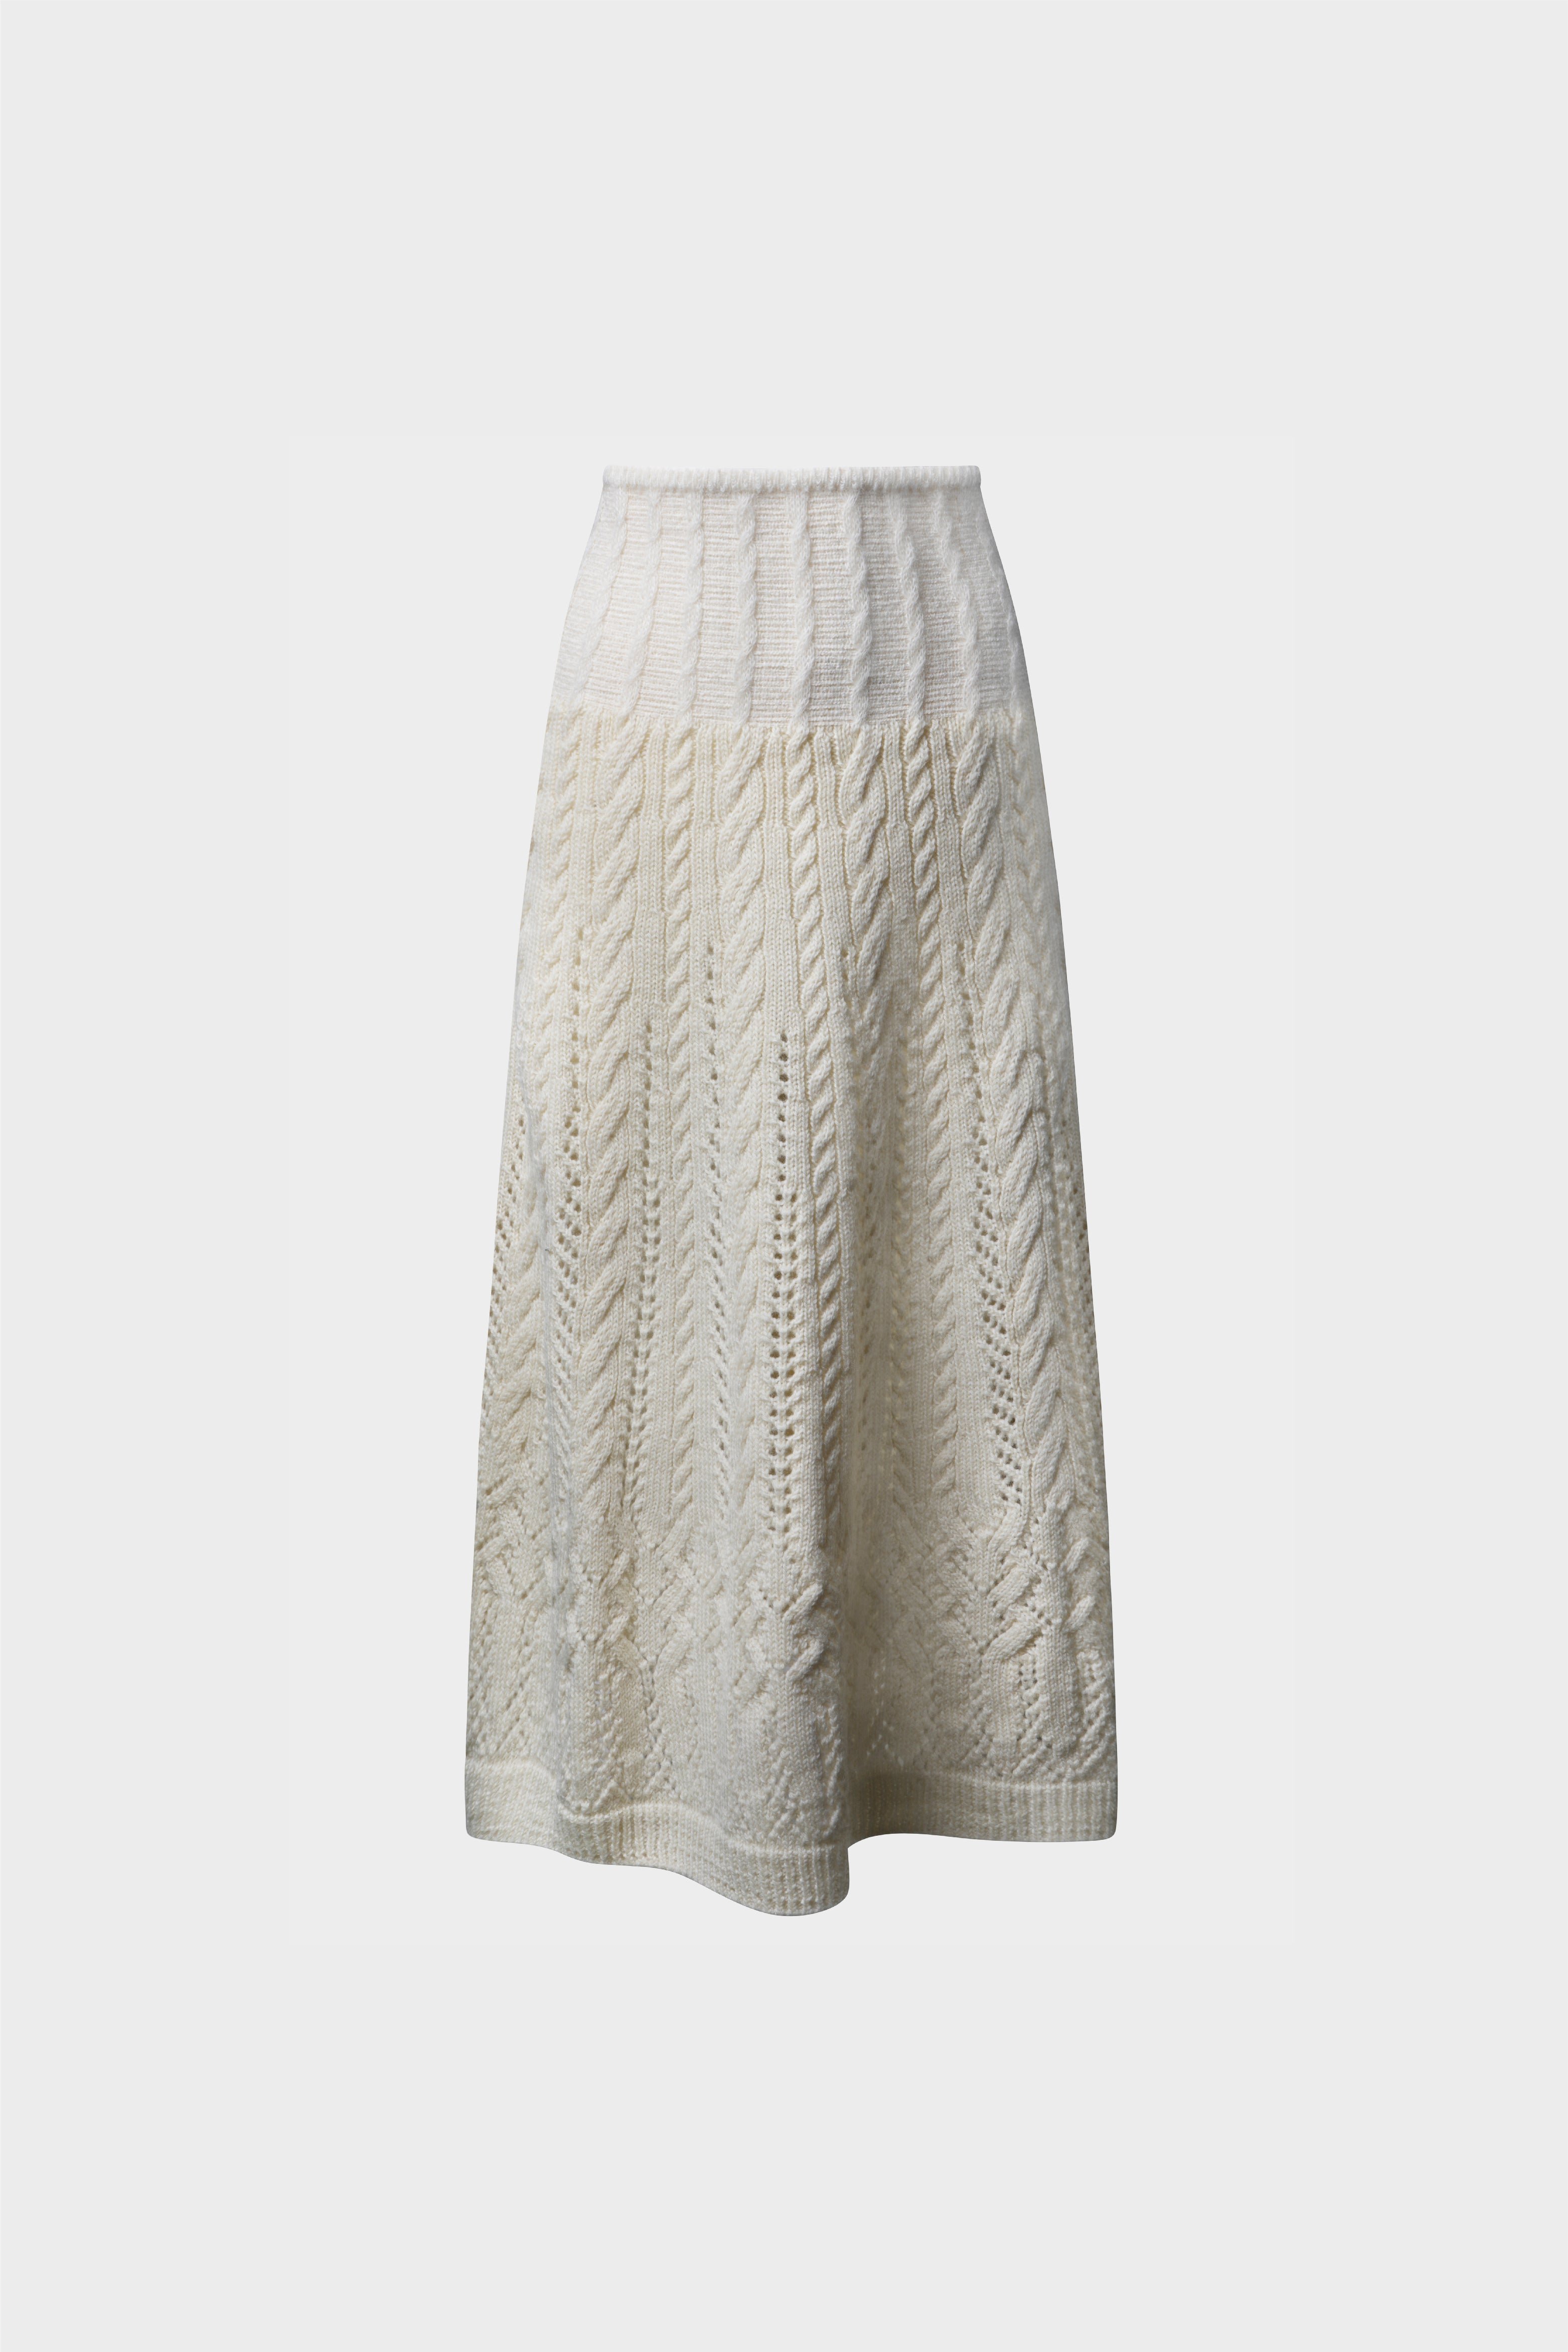 Selectshop FRAME - TAO Skirt Bottoms Concept Store Dubai